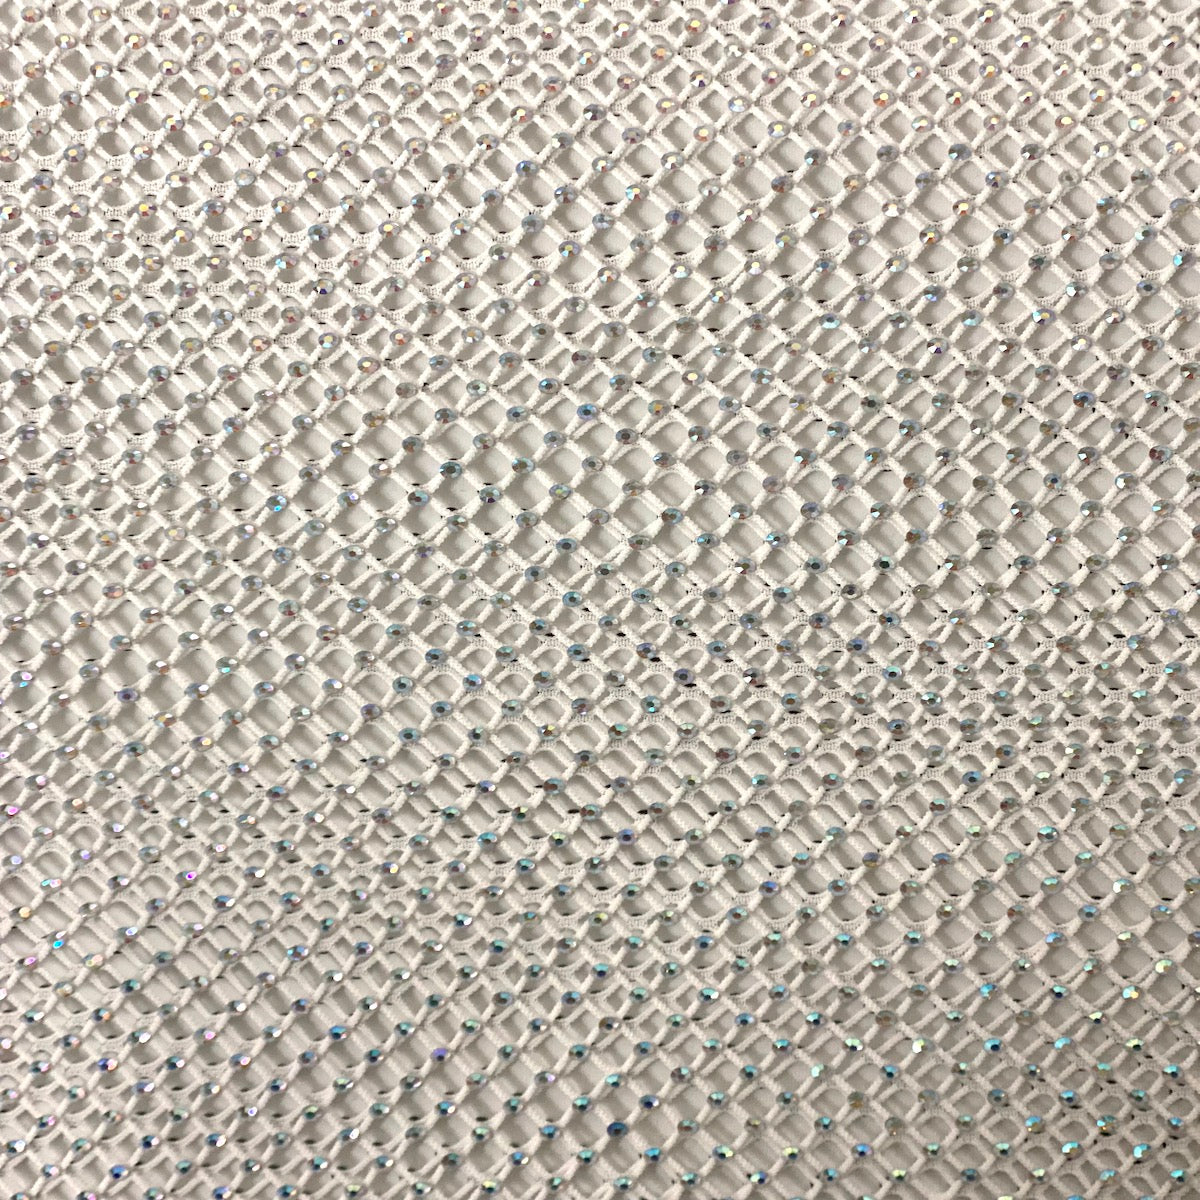 Iridescent Rhinestones Fabric On White Stretch Net Fabric, Fish Net wi